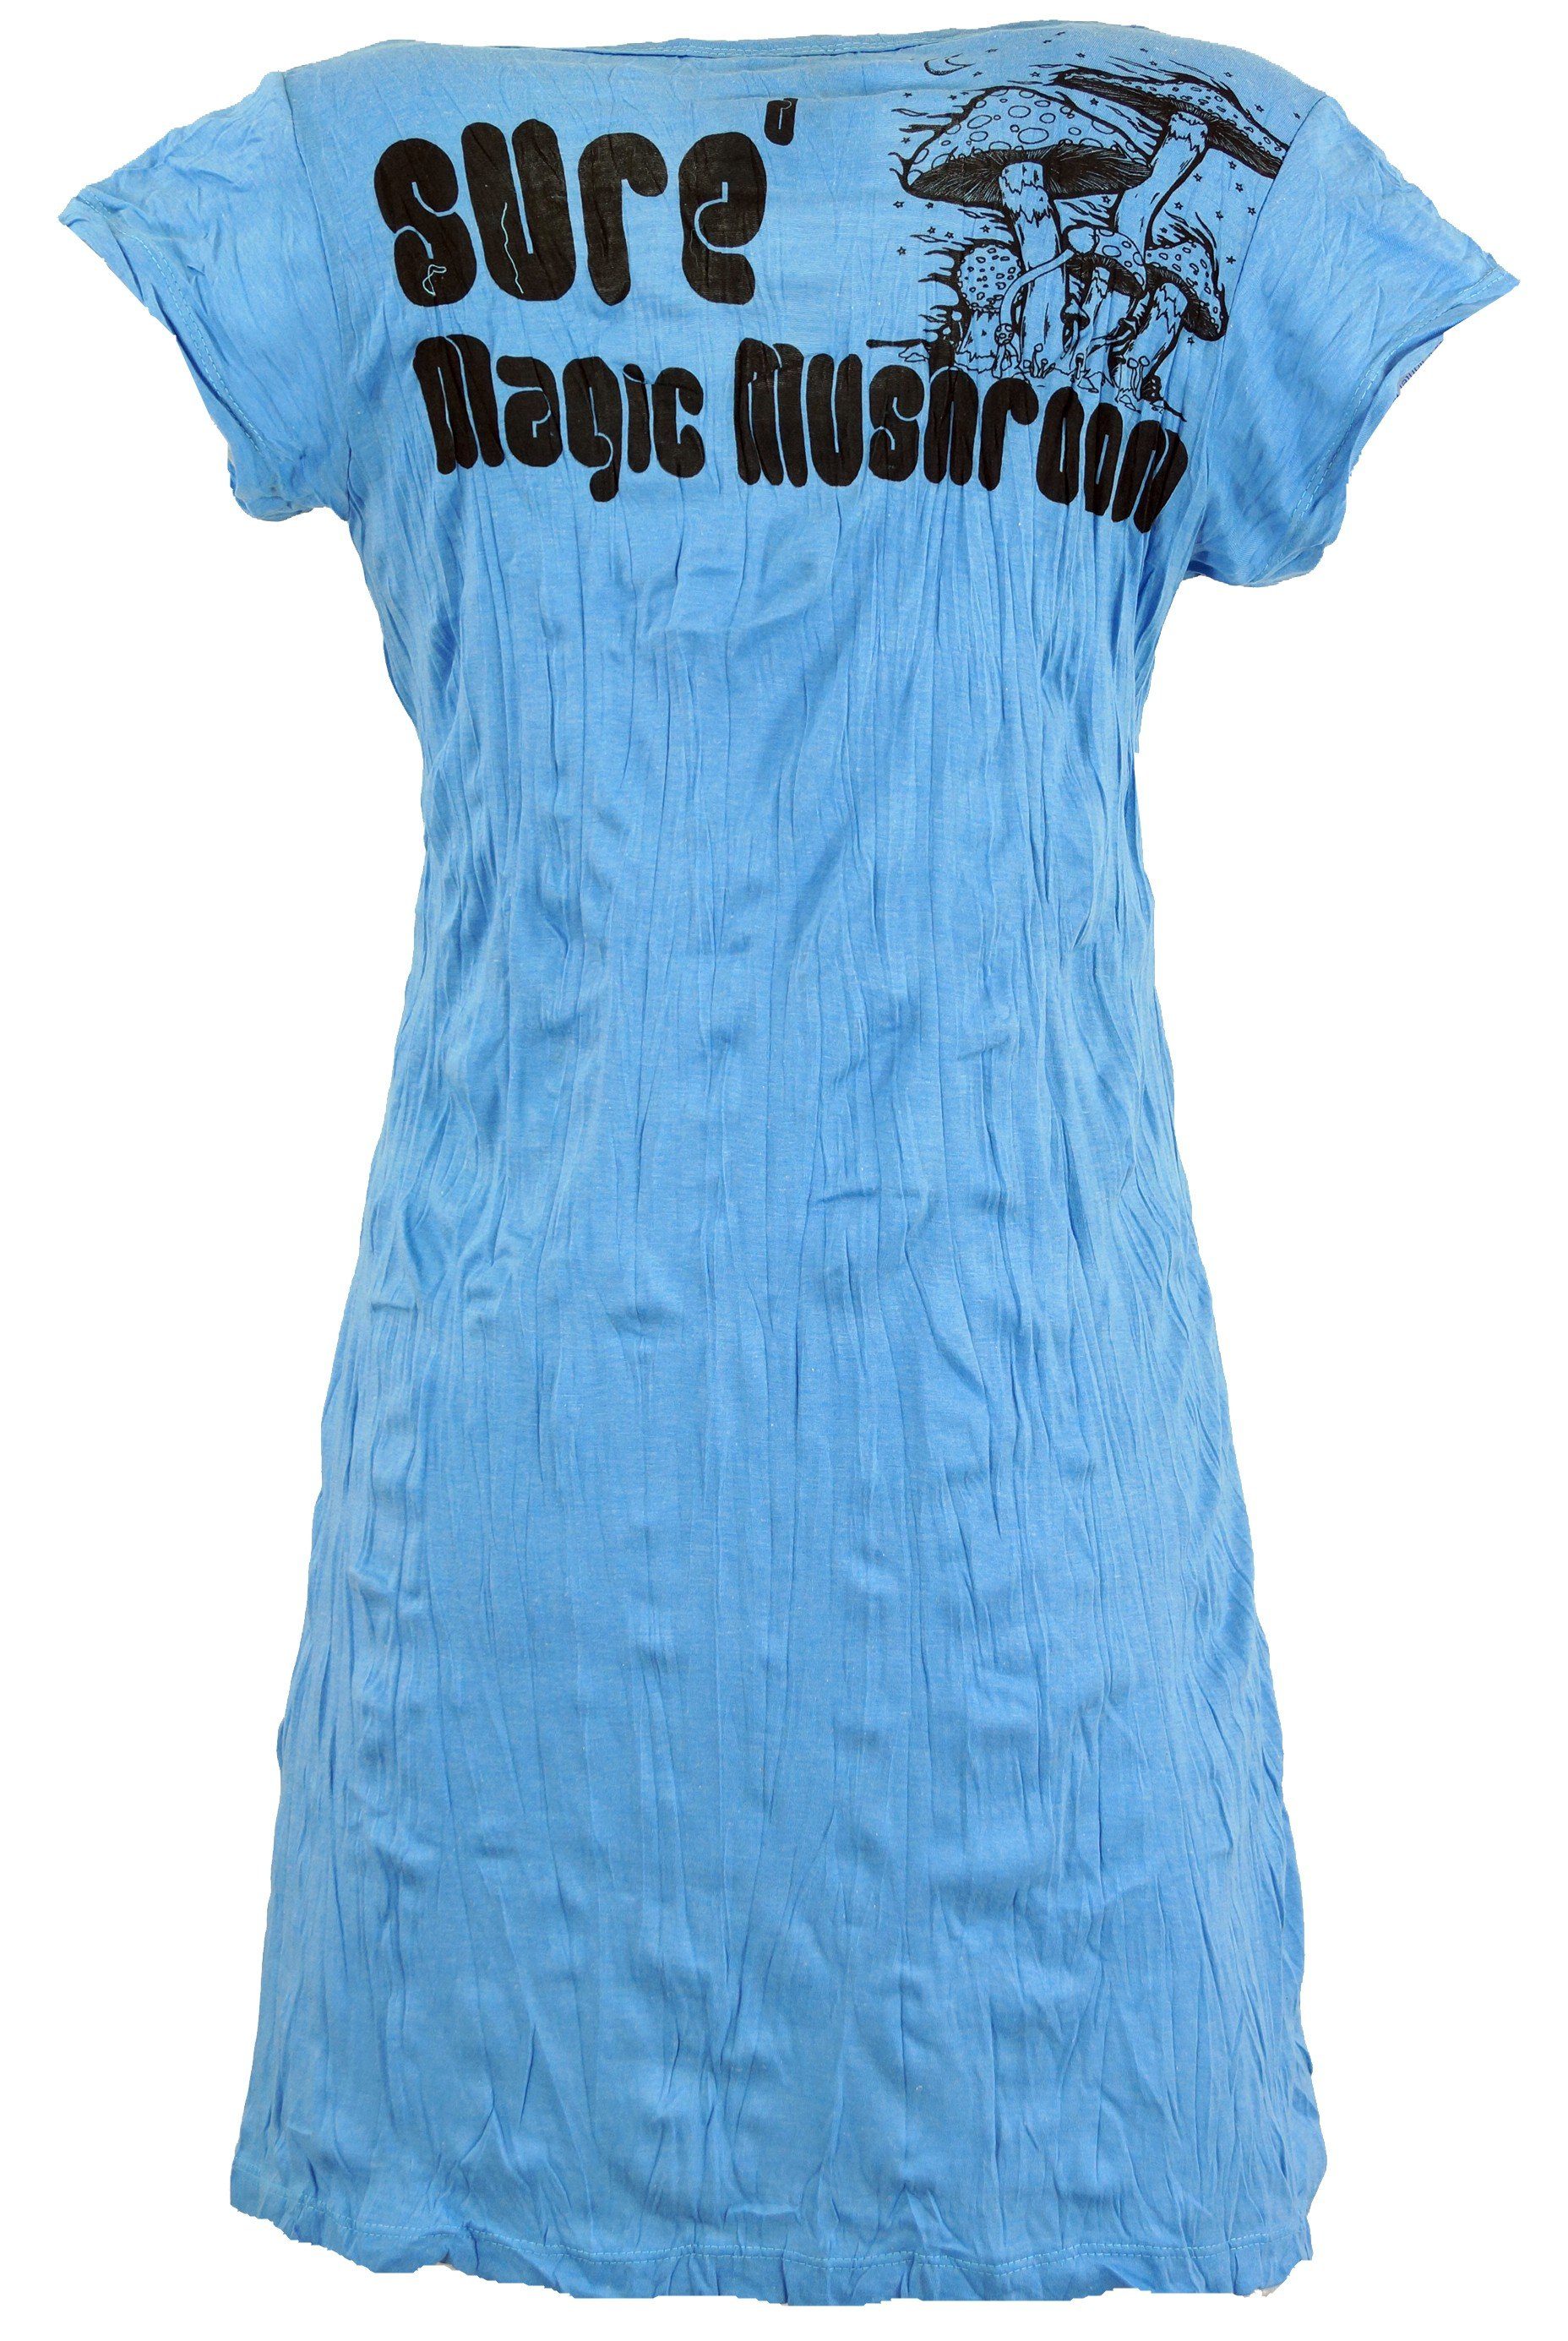 Shirt, Bekleidung Mushroom hellblau alternative Festival, Minikleid Long Style, Goa Sure -.. Magic Guru-Shop T-Shirt